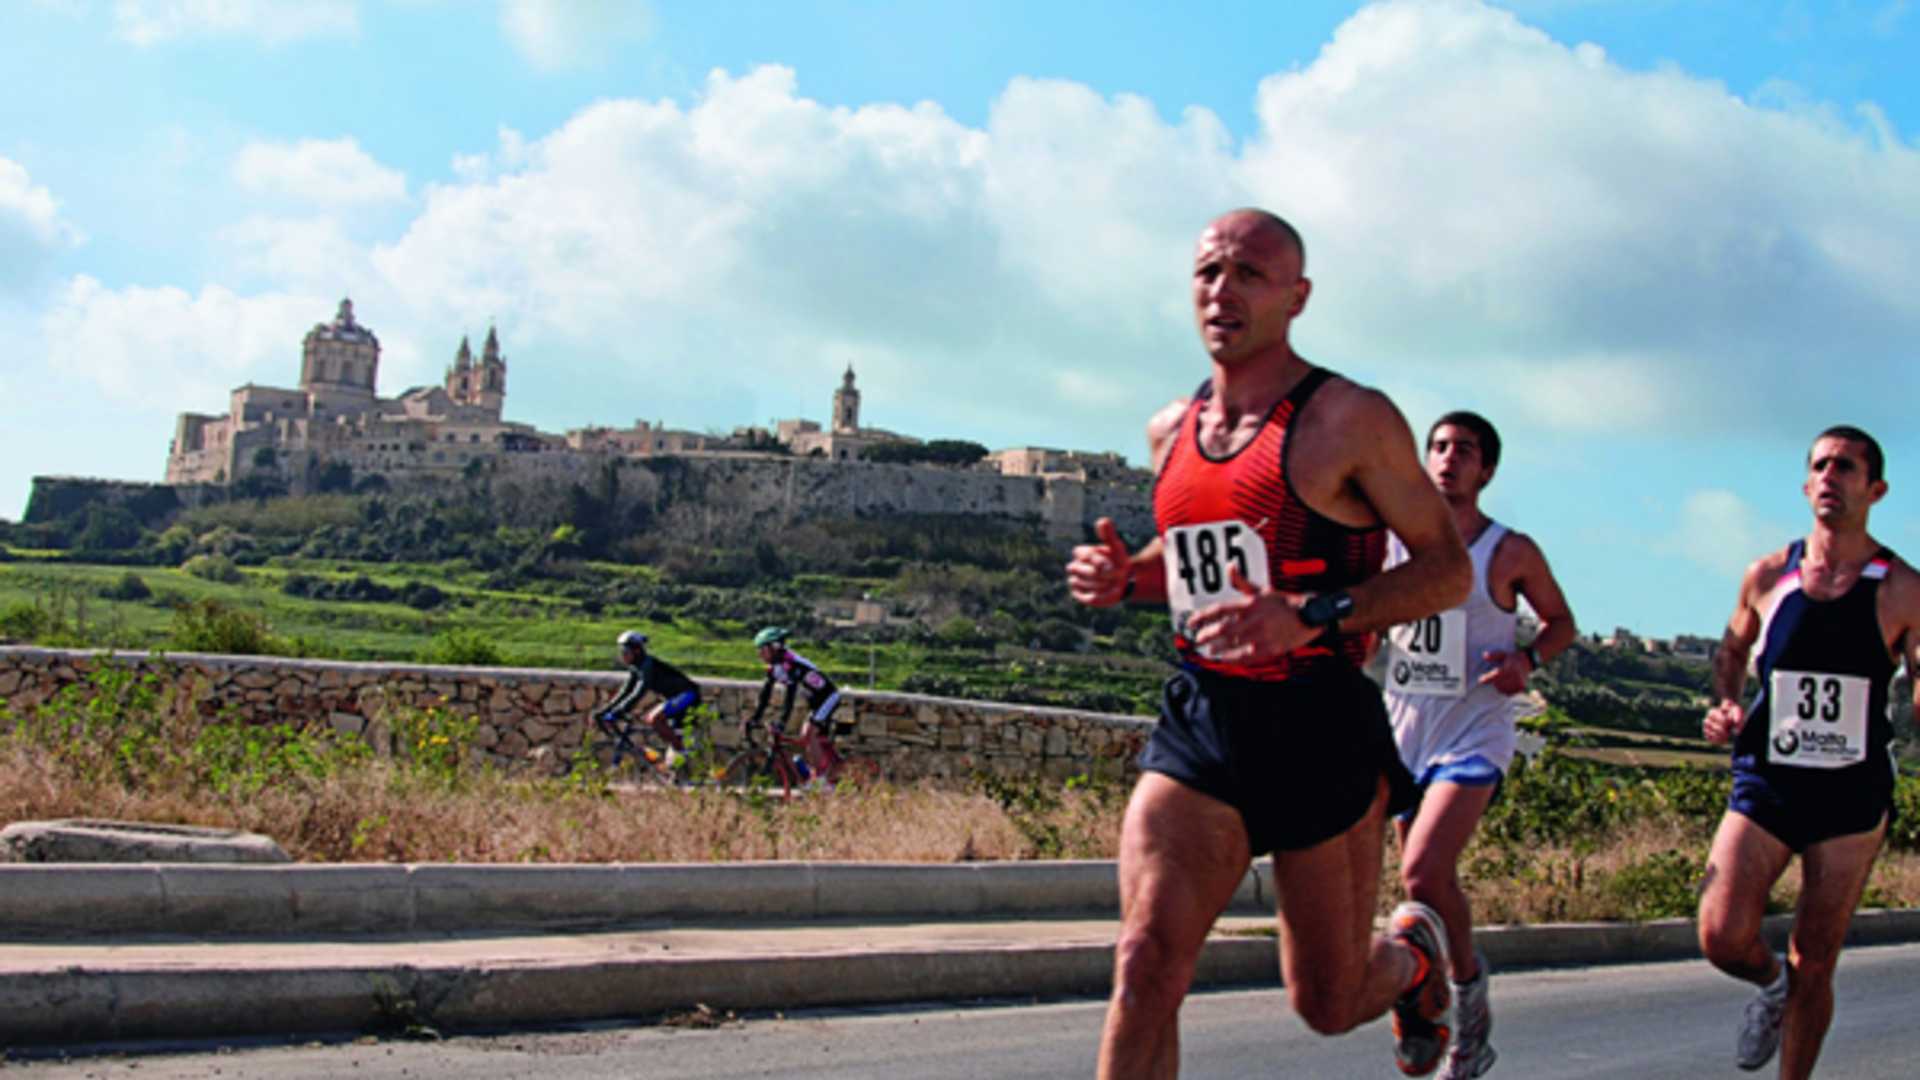 The Malta Marathon